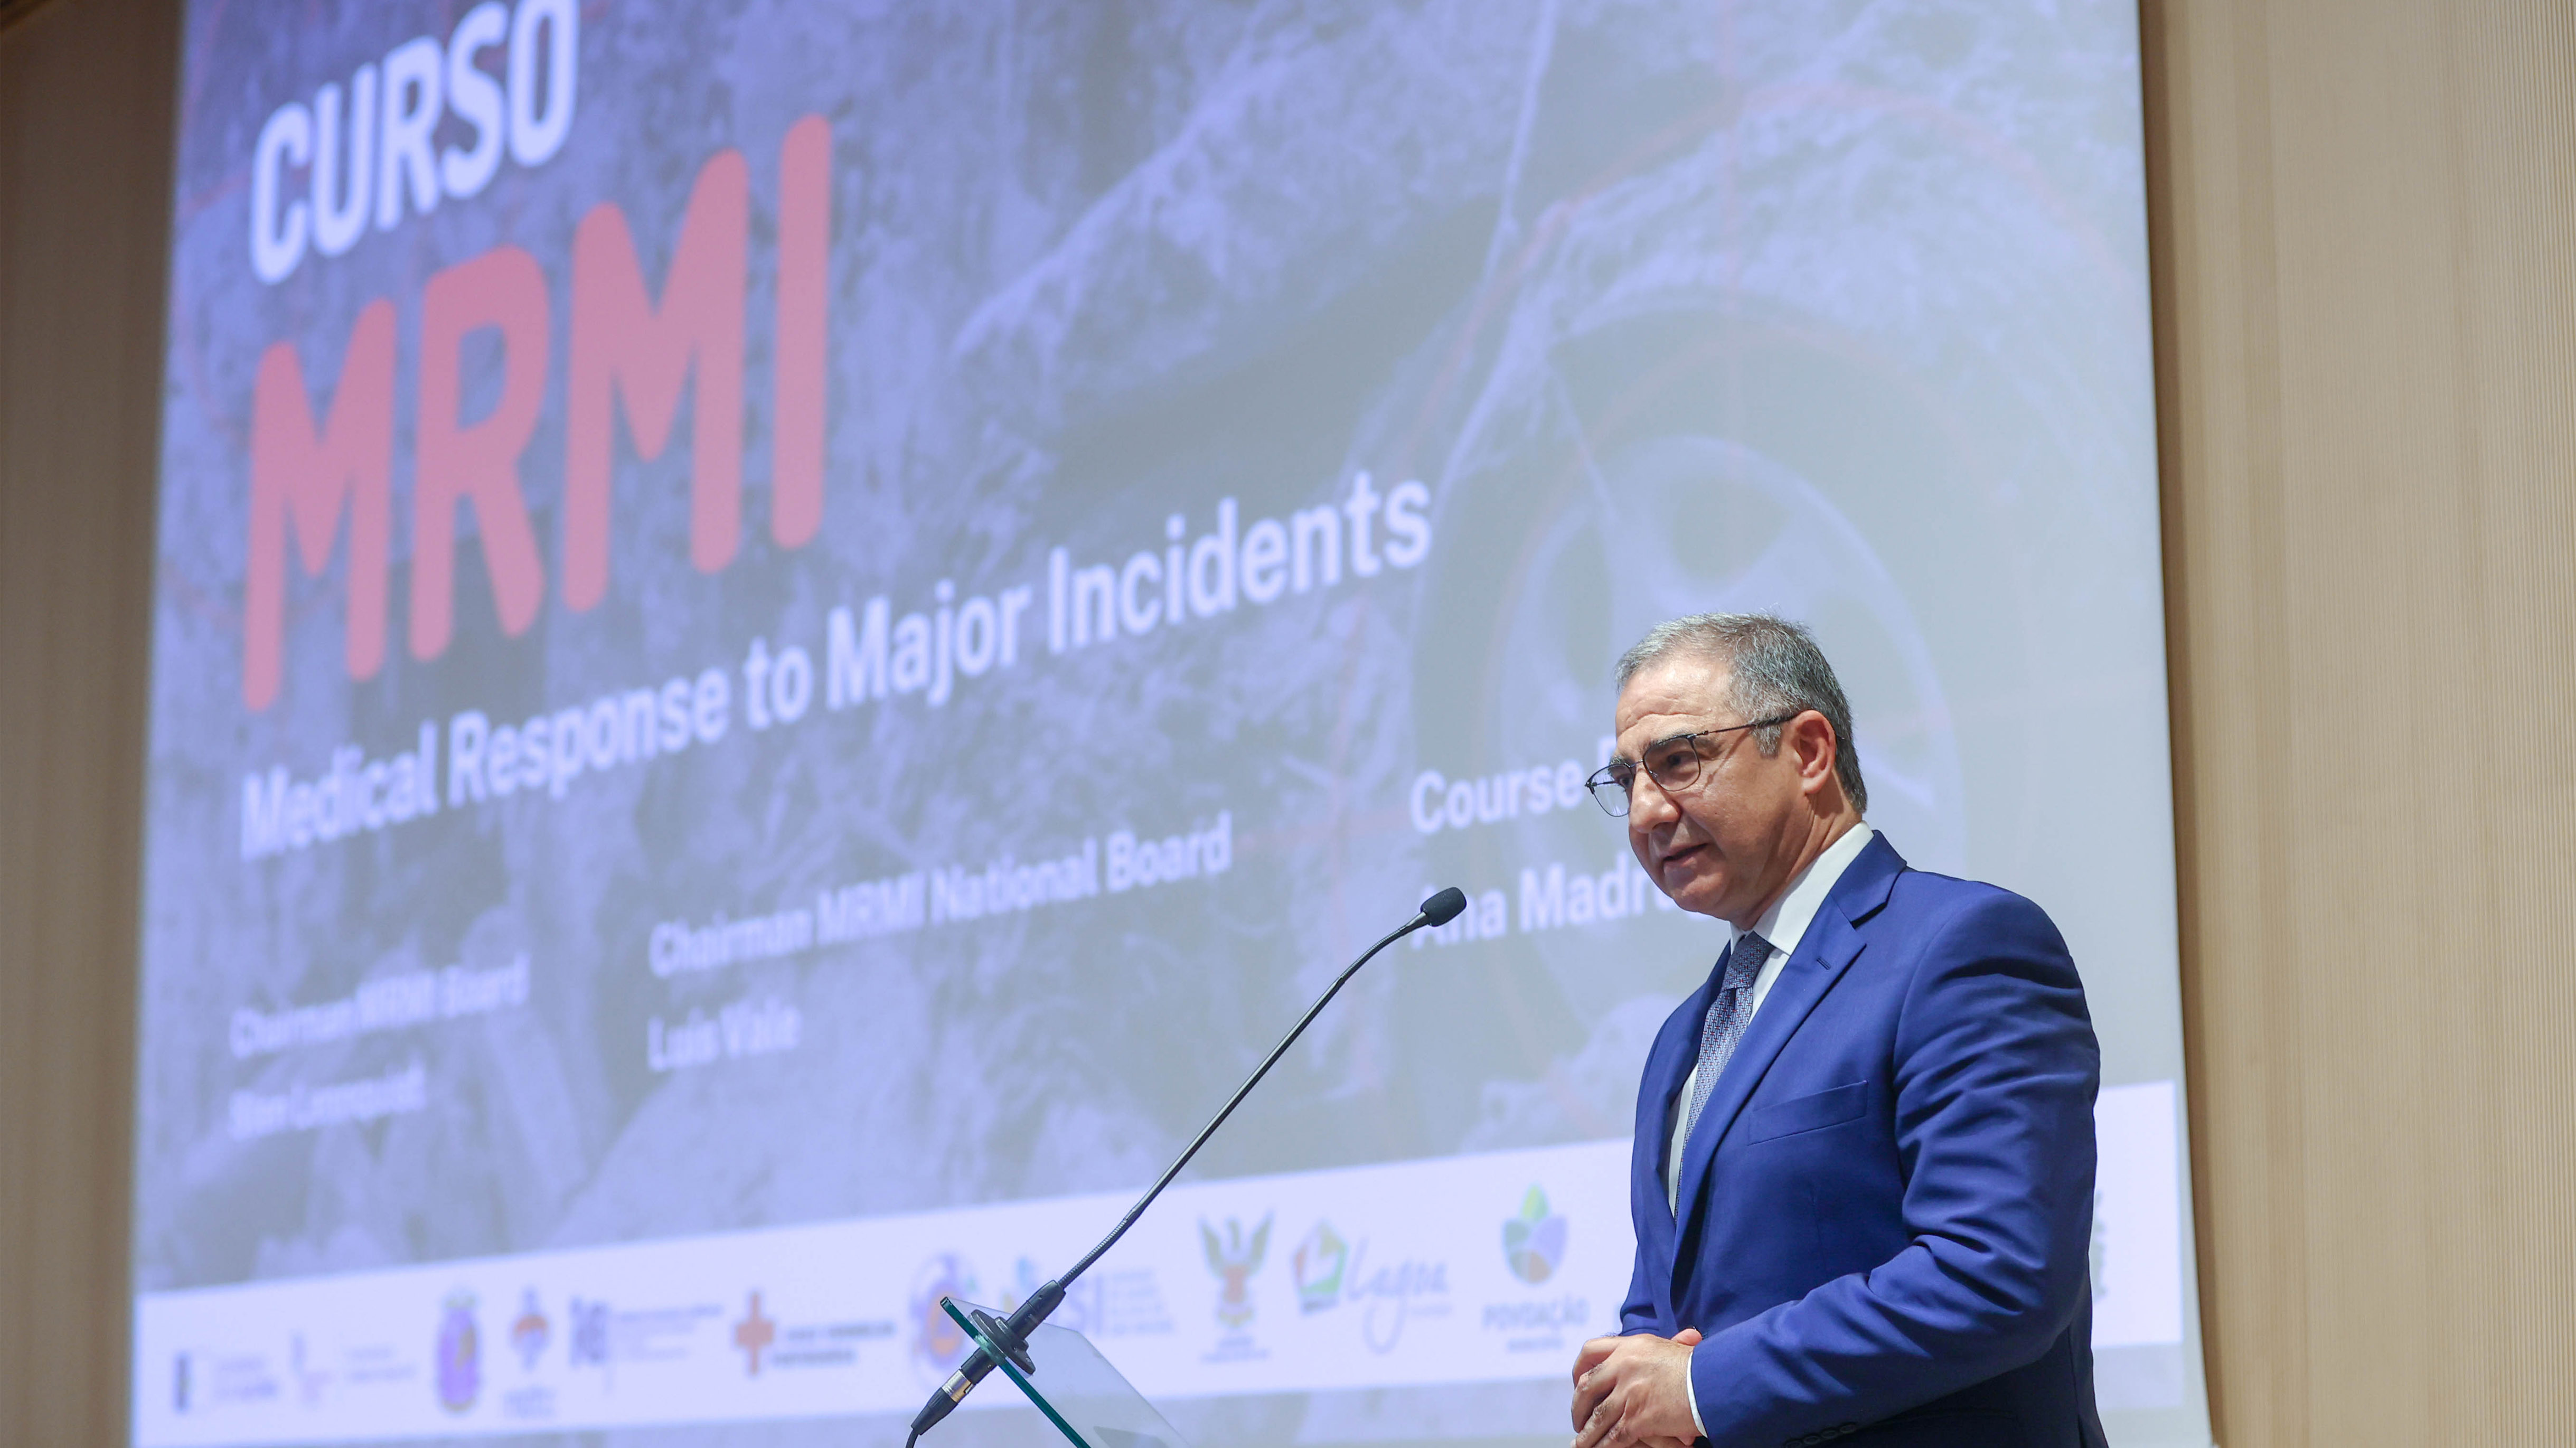 Abertura do curso Medical To Major Incidents (MRMI)